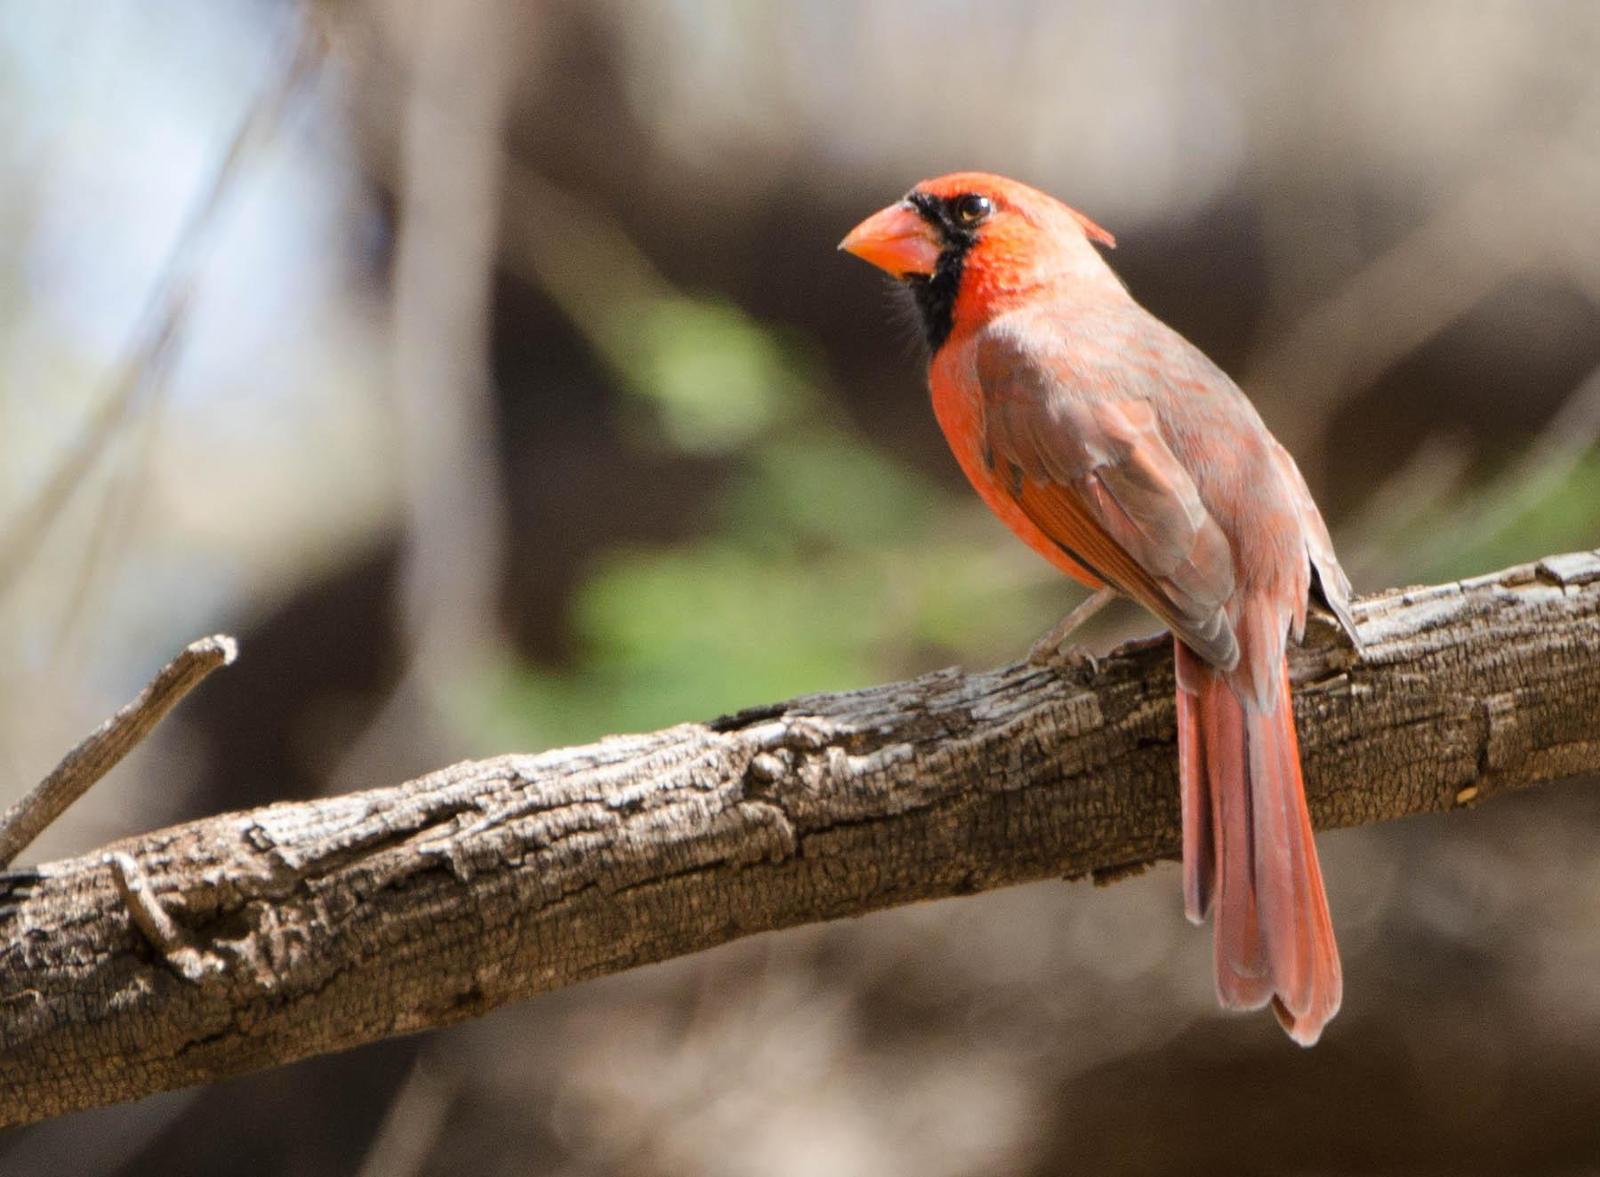 Northern Cardinal Photo by Scott Yerges